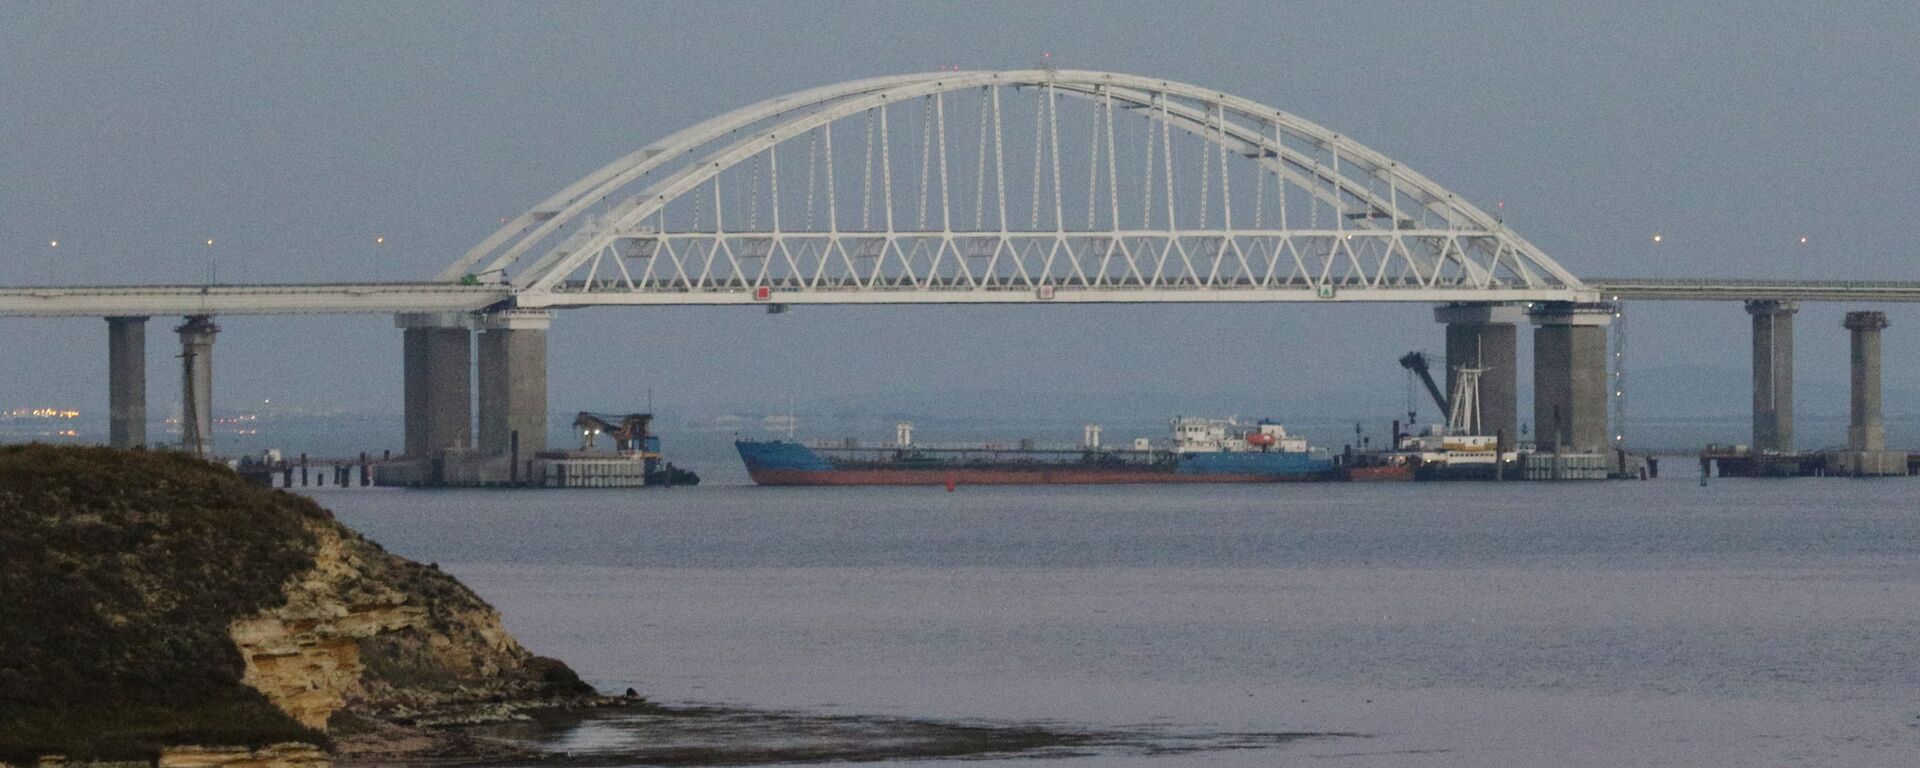 A cargo ship blocks a passage under the arch of the Crimean bridge over Kerch Strait in Russia, November 25, 2018 - Sputnik International, 1920, 08.07.2022